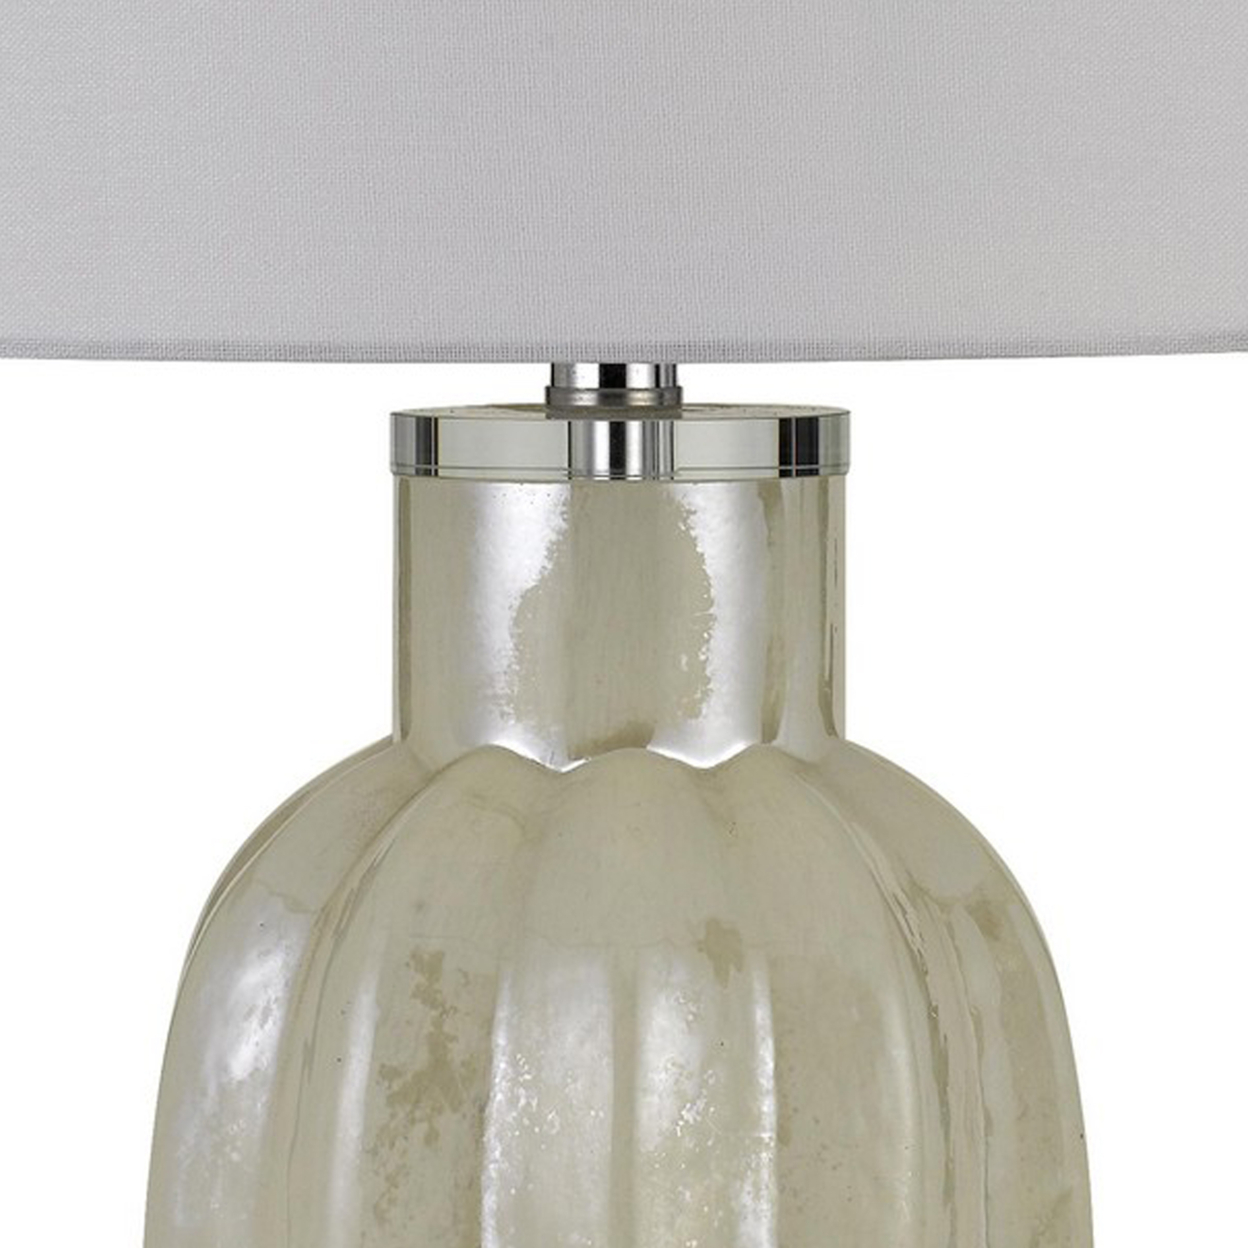 Glass Table Lamp With Round Hardback Fabric Shade, White- Saltoro Sherpi